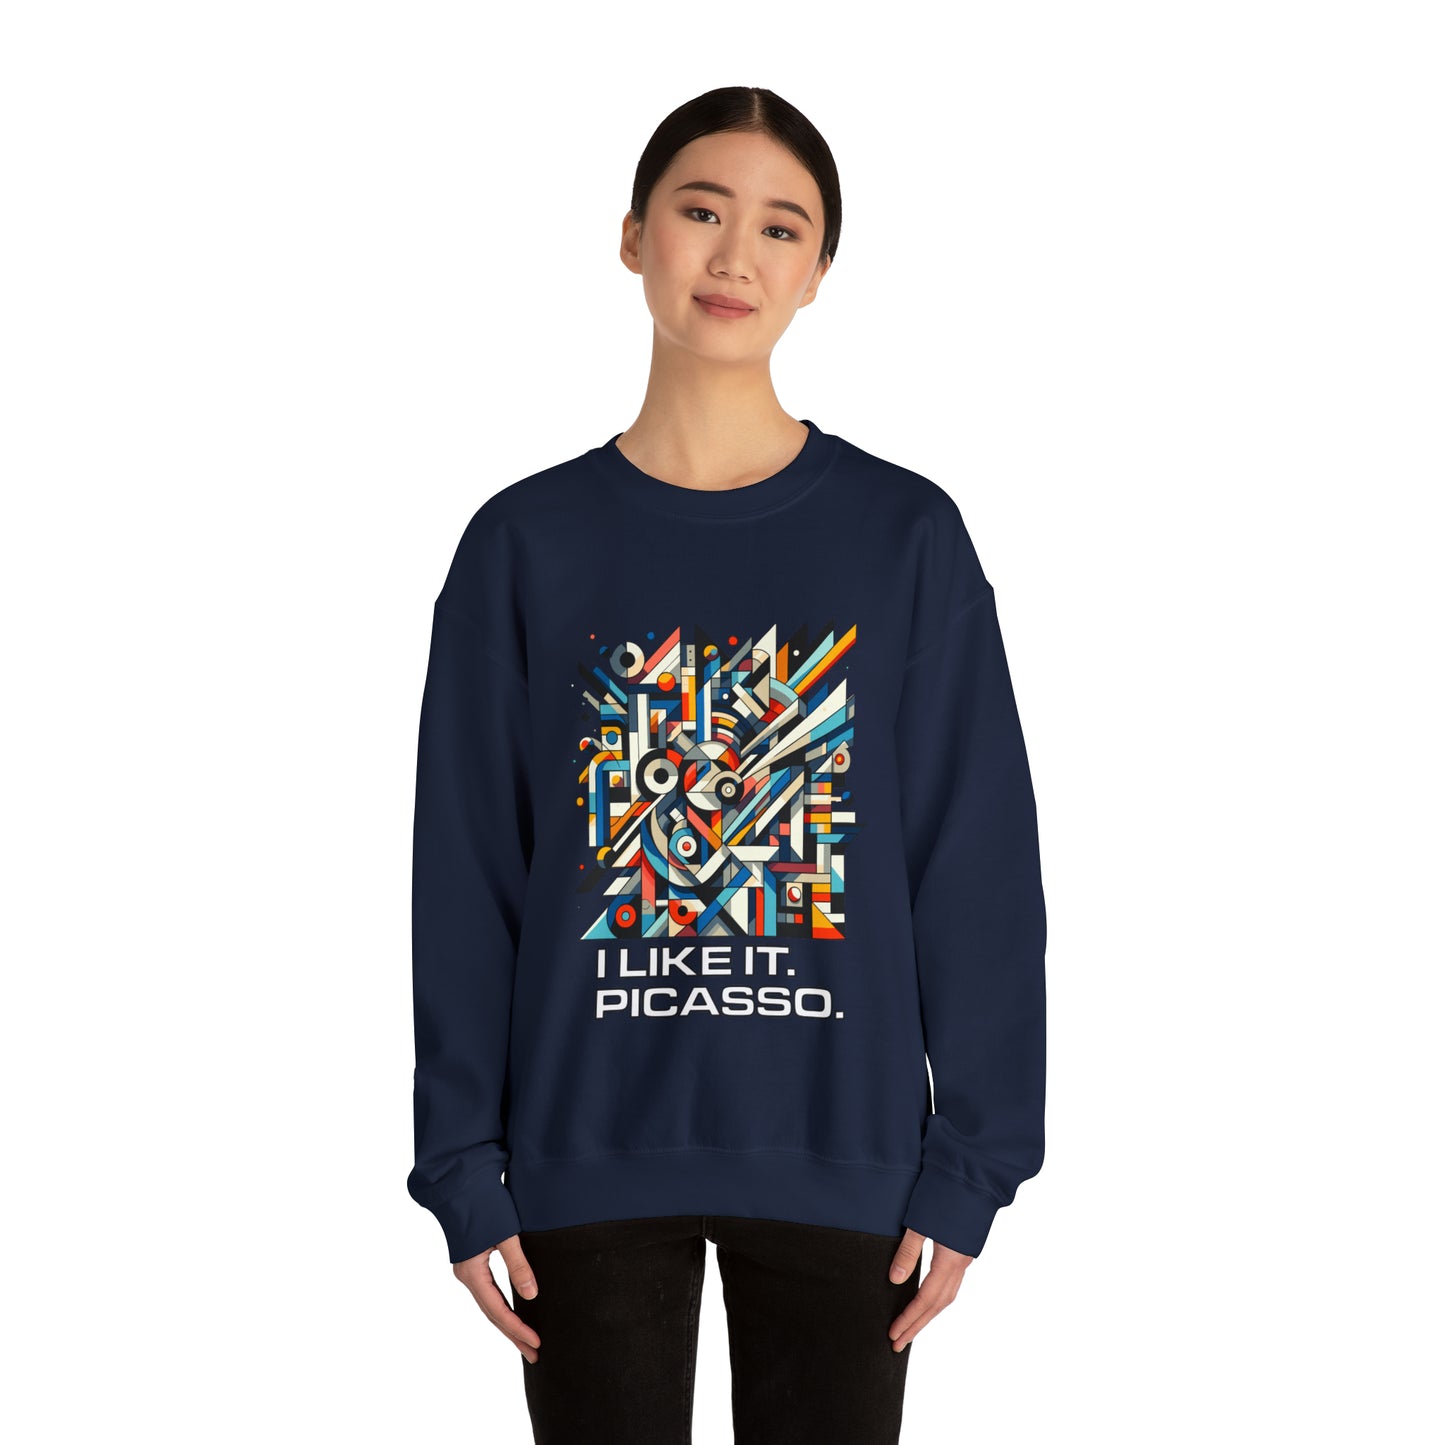 I Like It. Picasso. Crewneck Sweatshirt